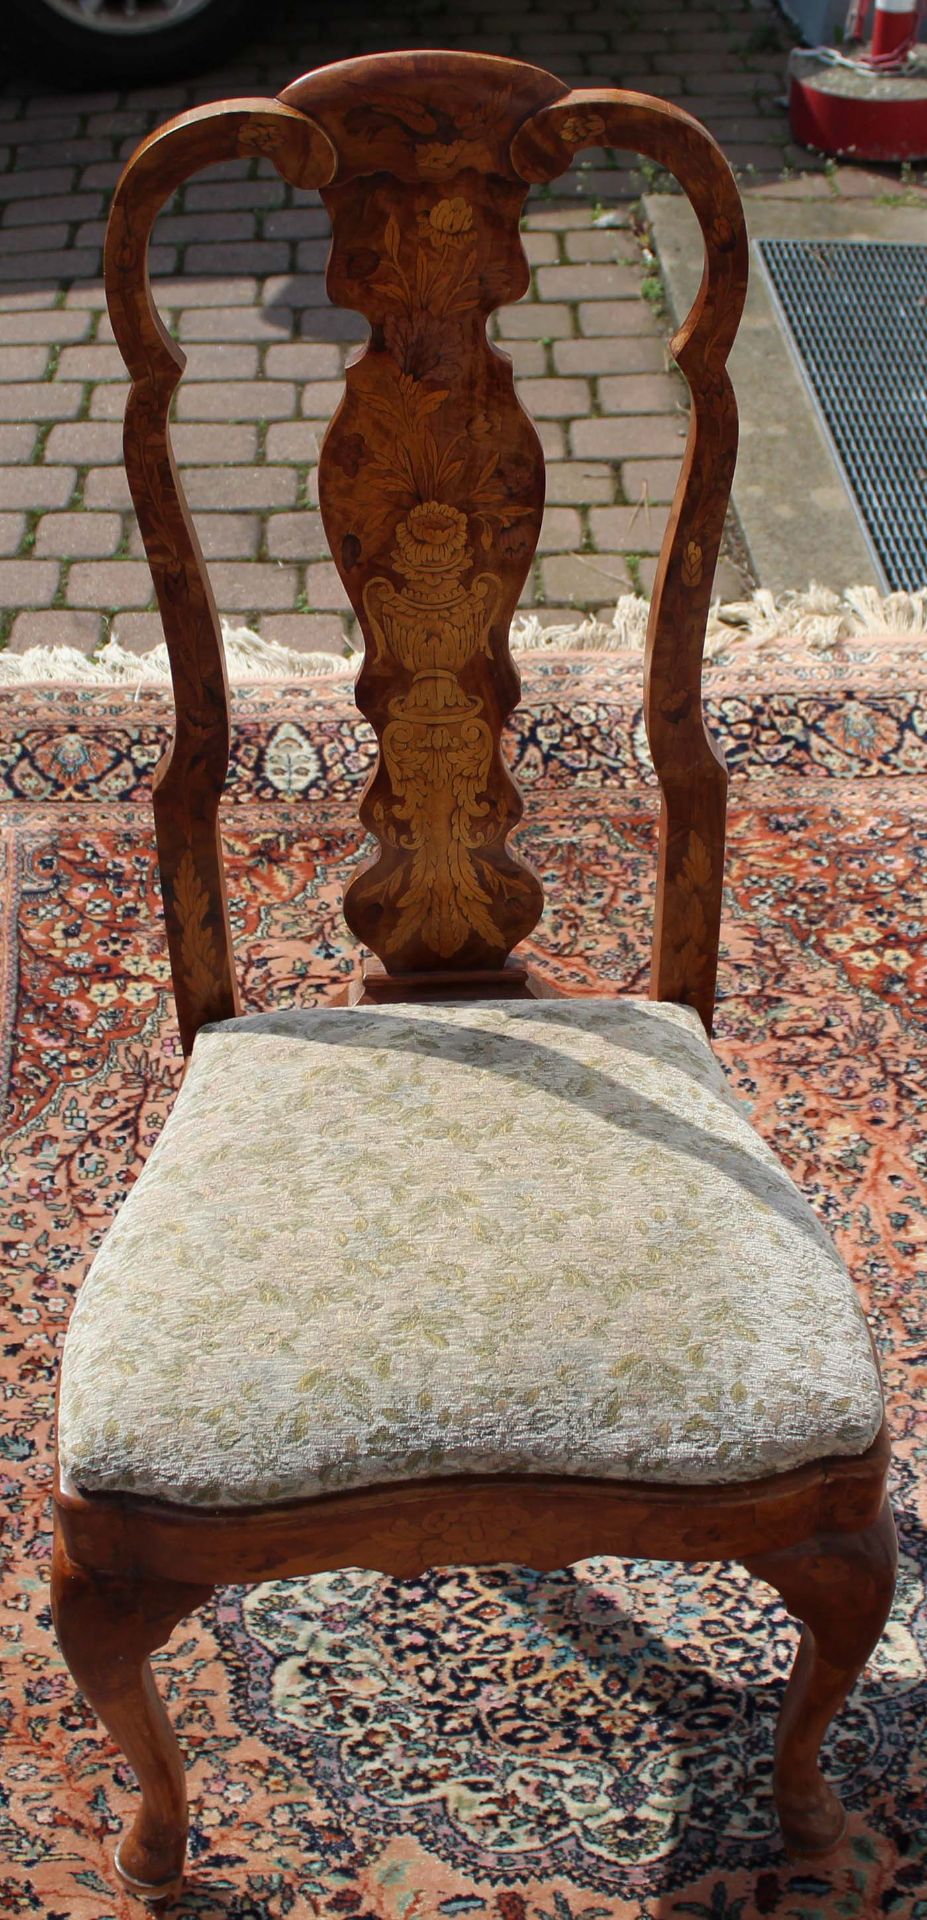 4 Stühle. Ebonisiert. Holland Stil.108(49) cm x 49 cm x 43 cm.4 chairs. Ebonized. Holland style. - Image 5 of 6